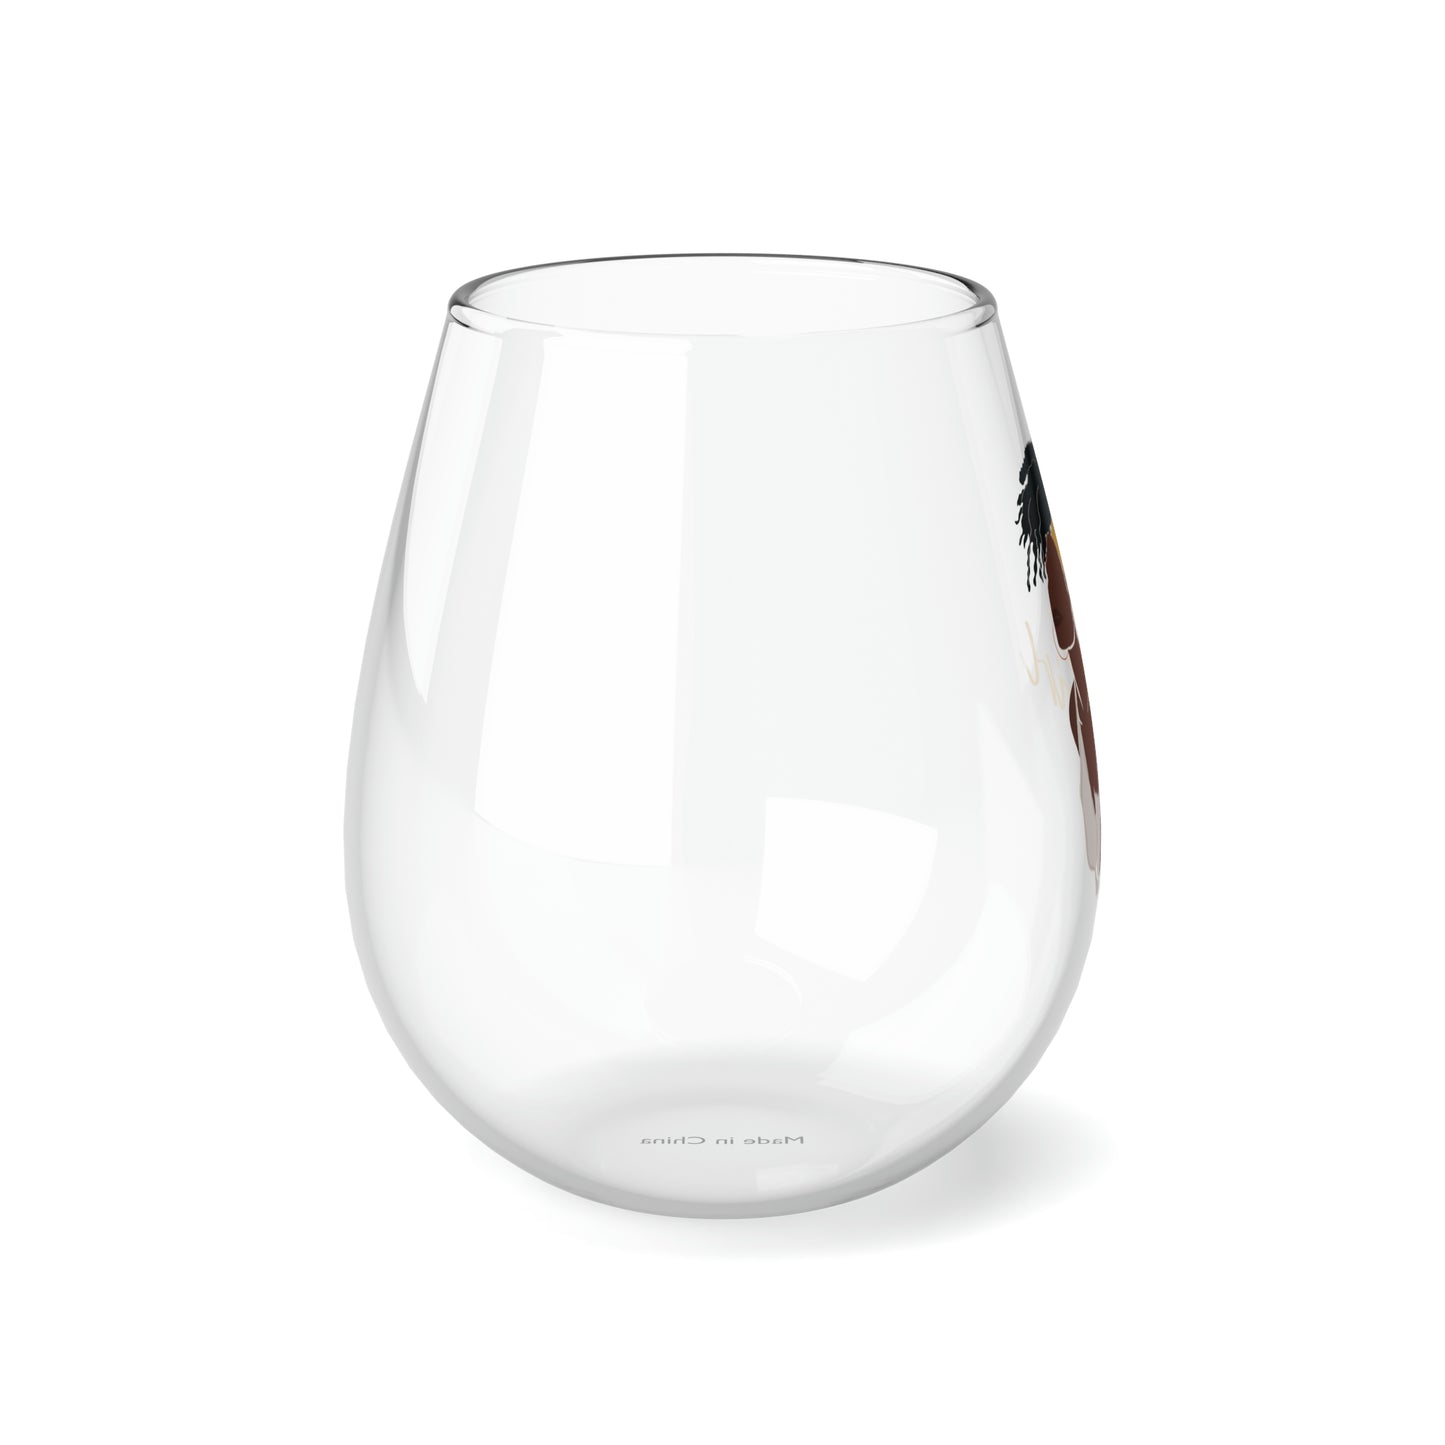 lover girl Stemless Wine Glass, 11.75oz